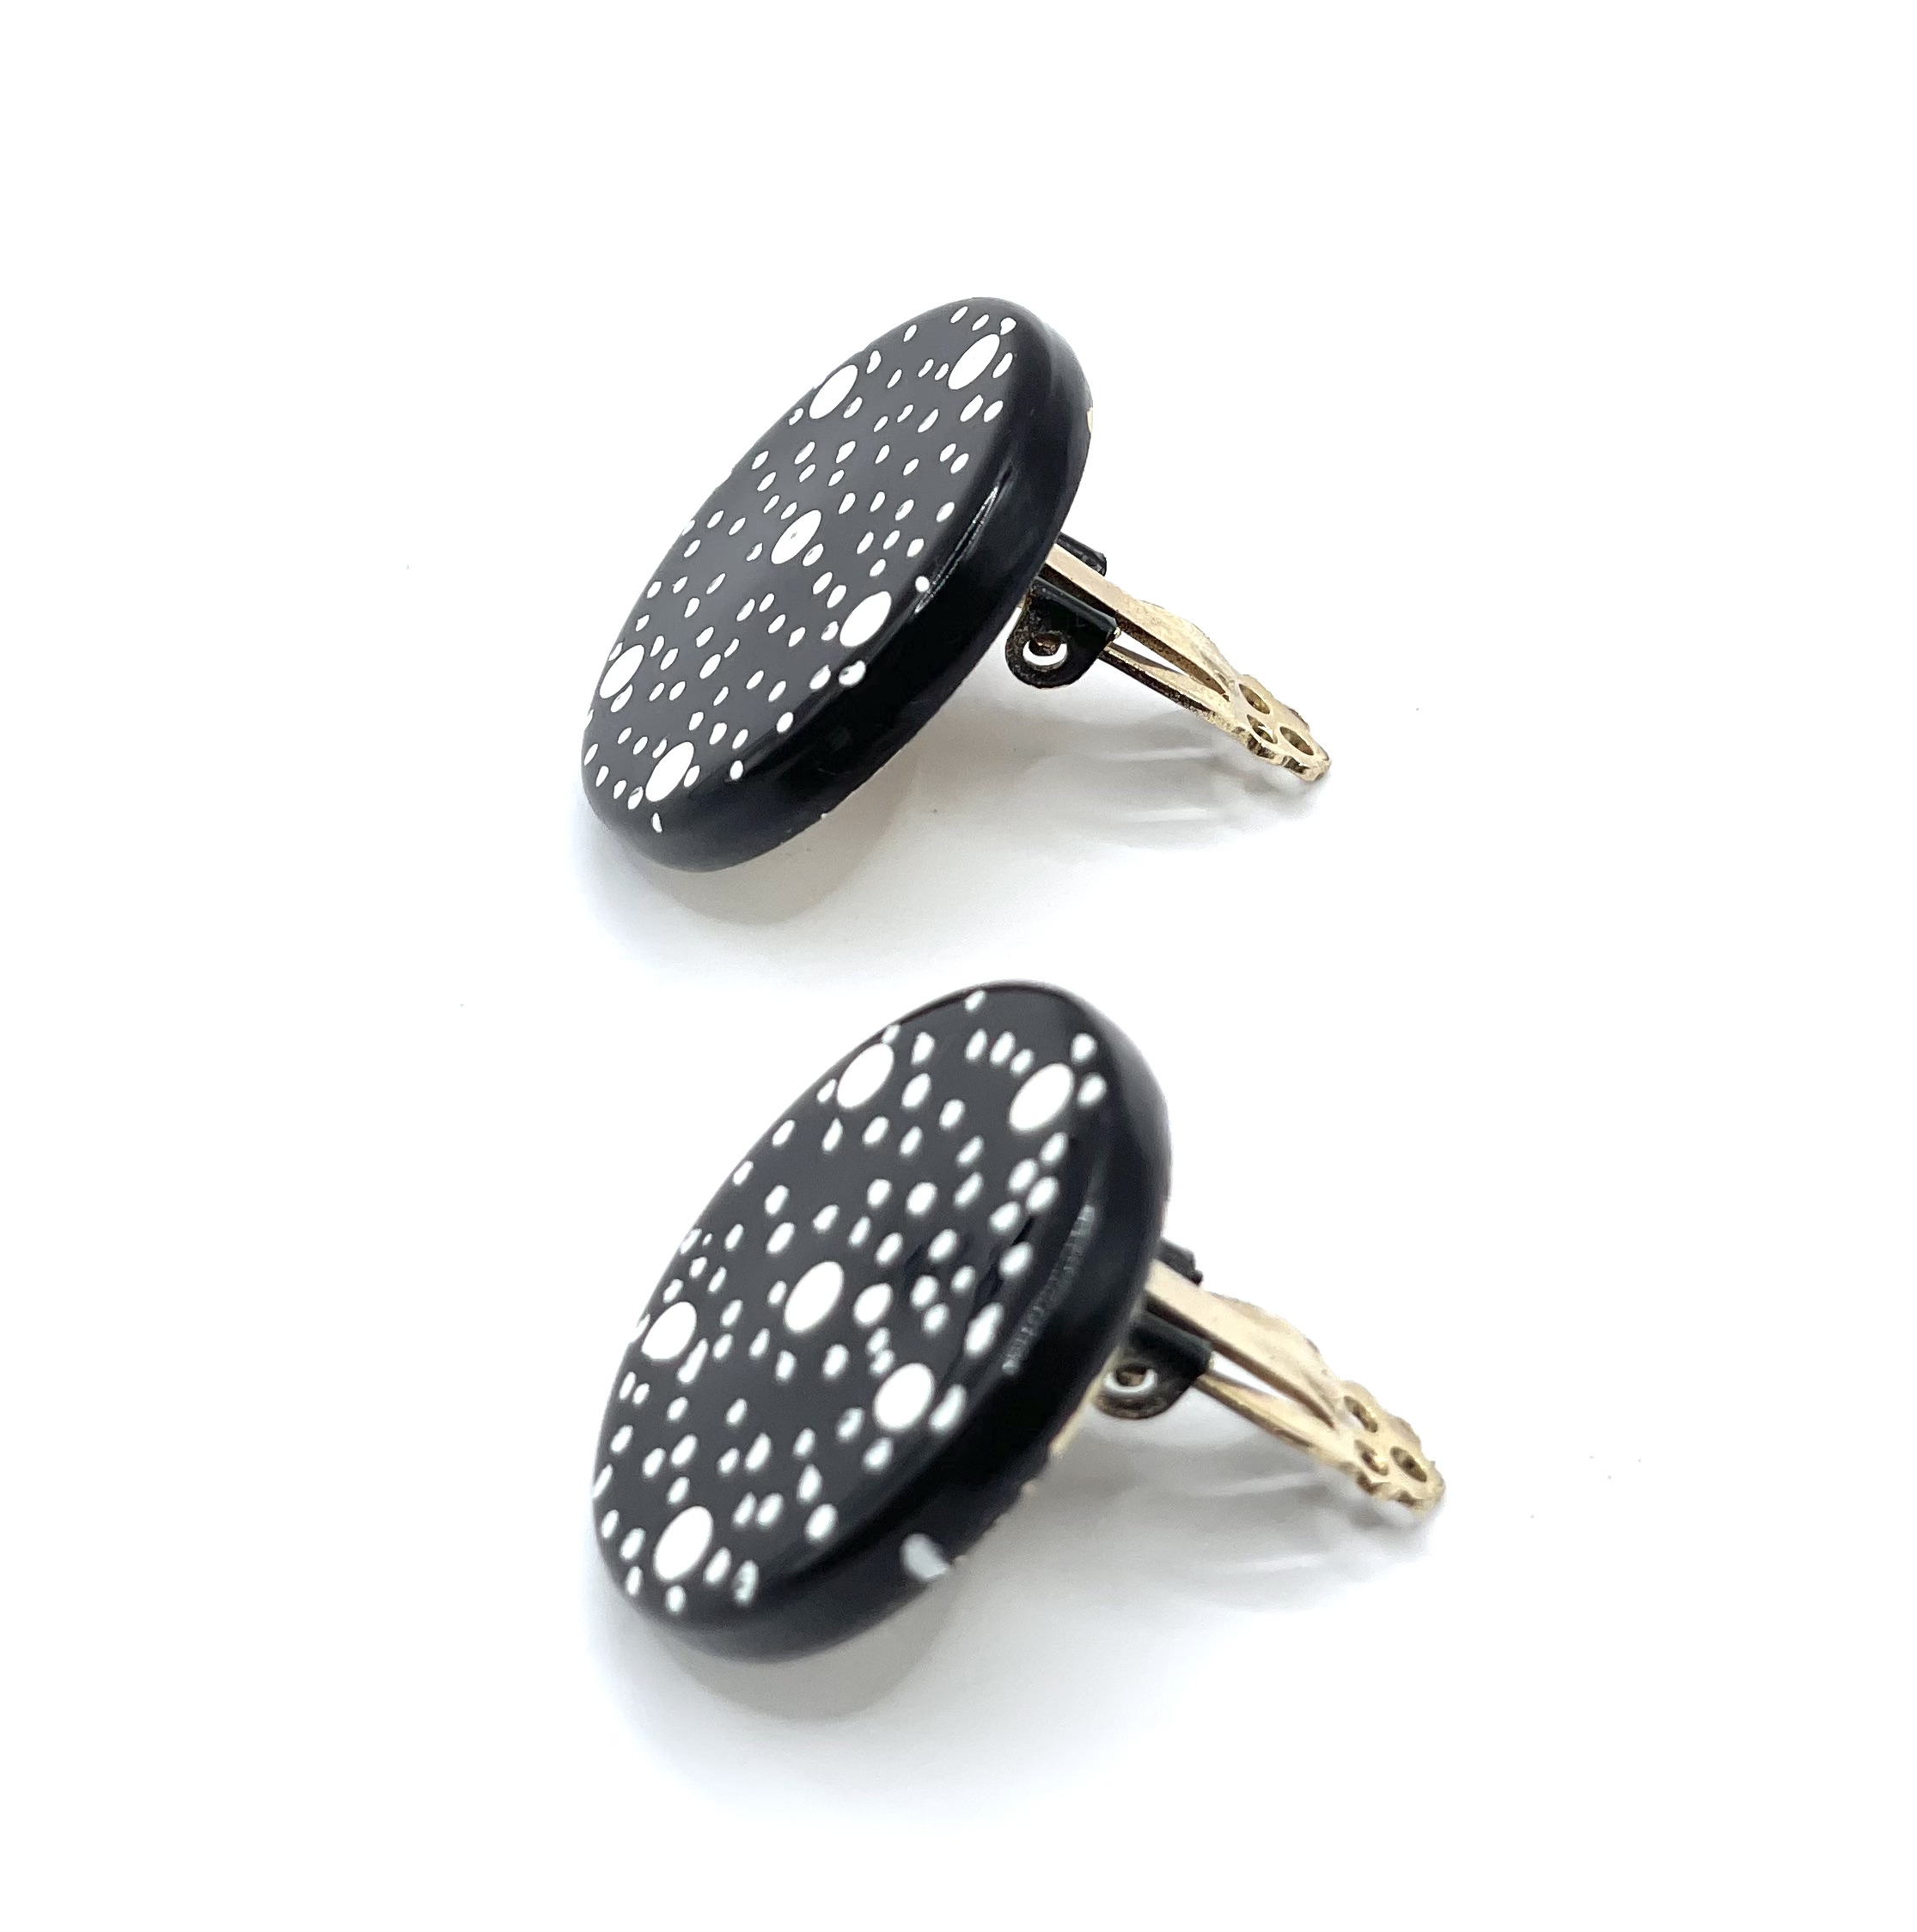 Black and white polka dot earrings